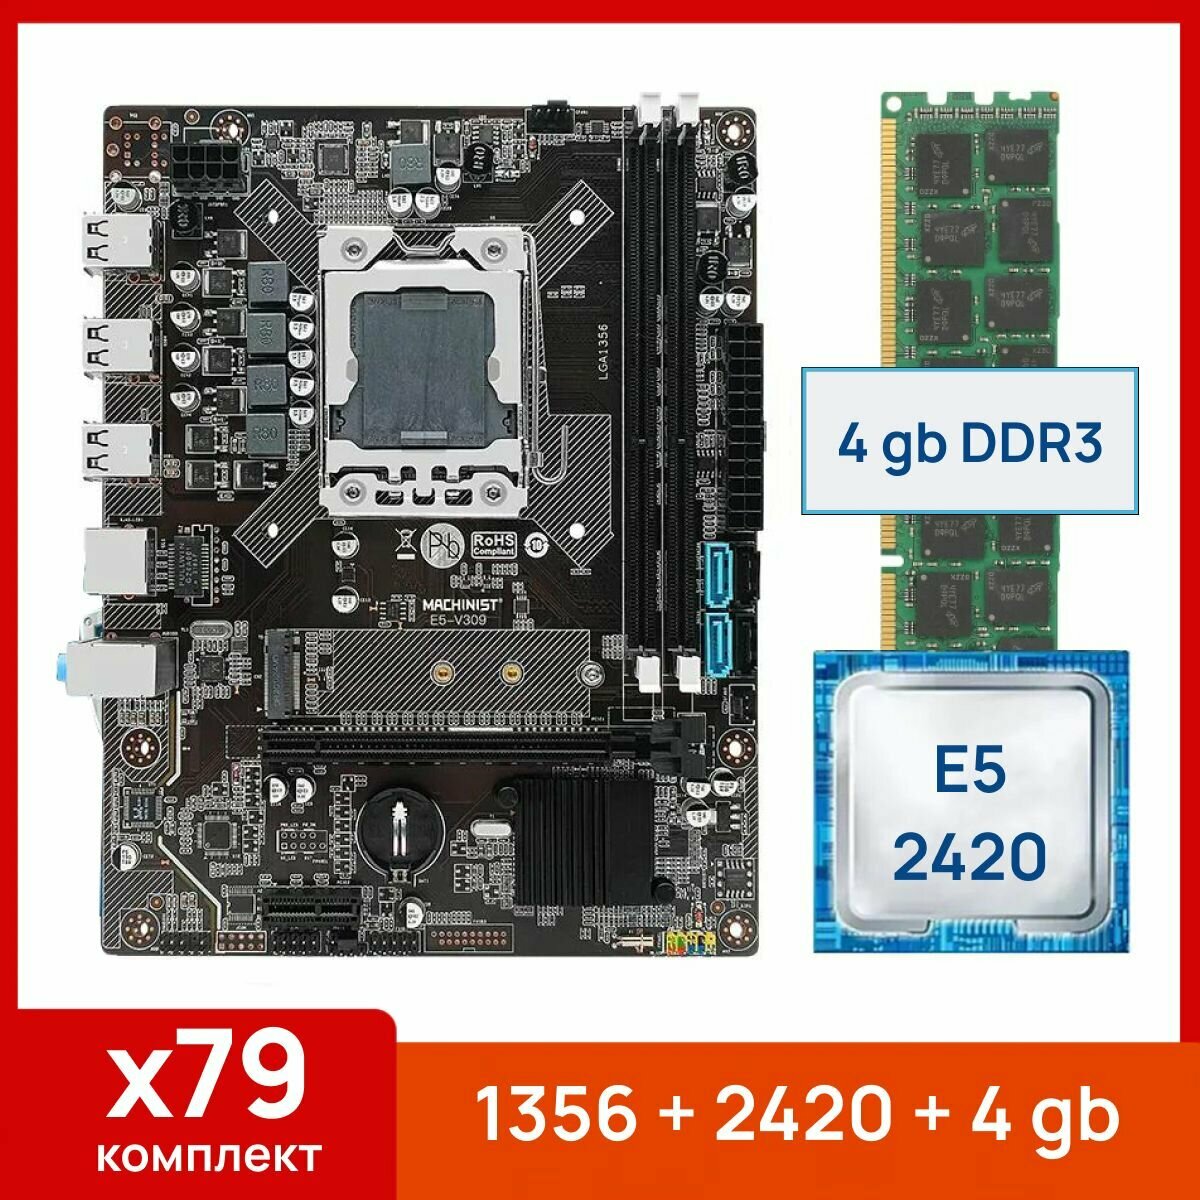 Комплект: Материнская плата Machinist 1356 + Процессор Xeon E5 2420 + 4 gb(1x4gb) DDR3 серверная